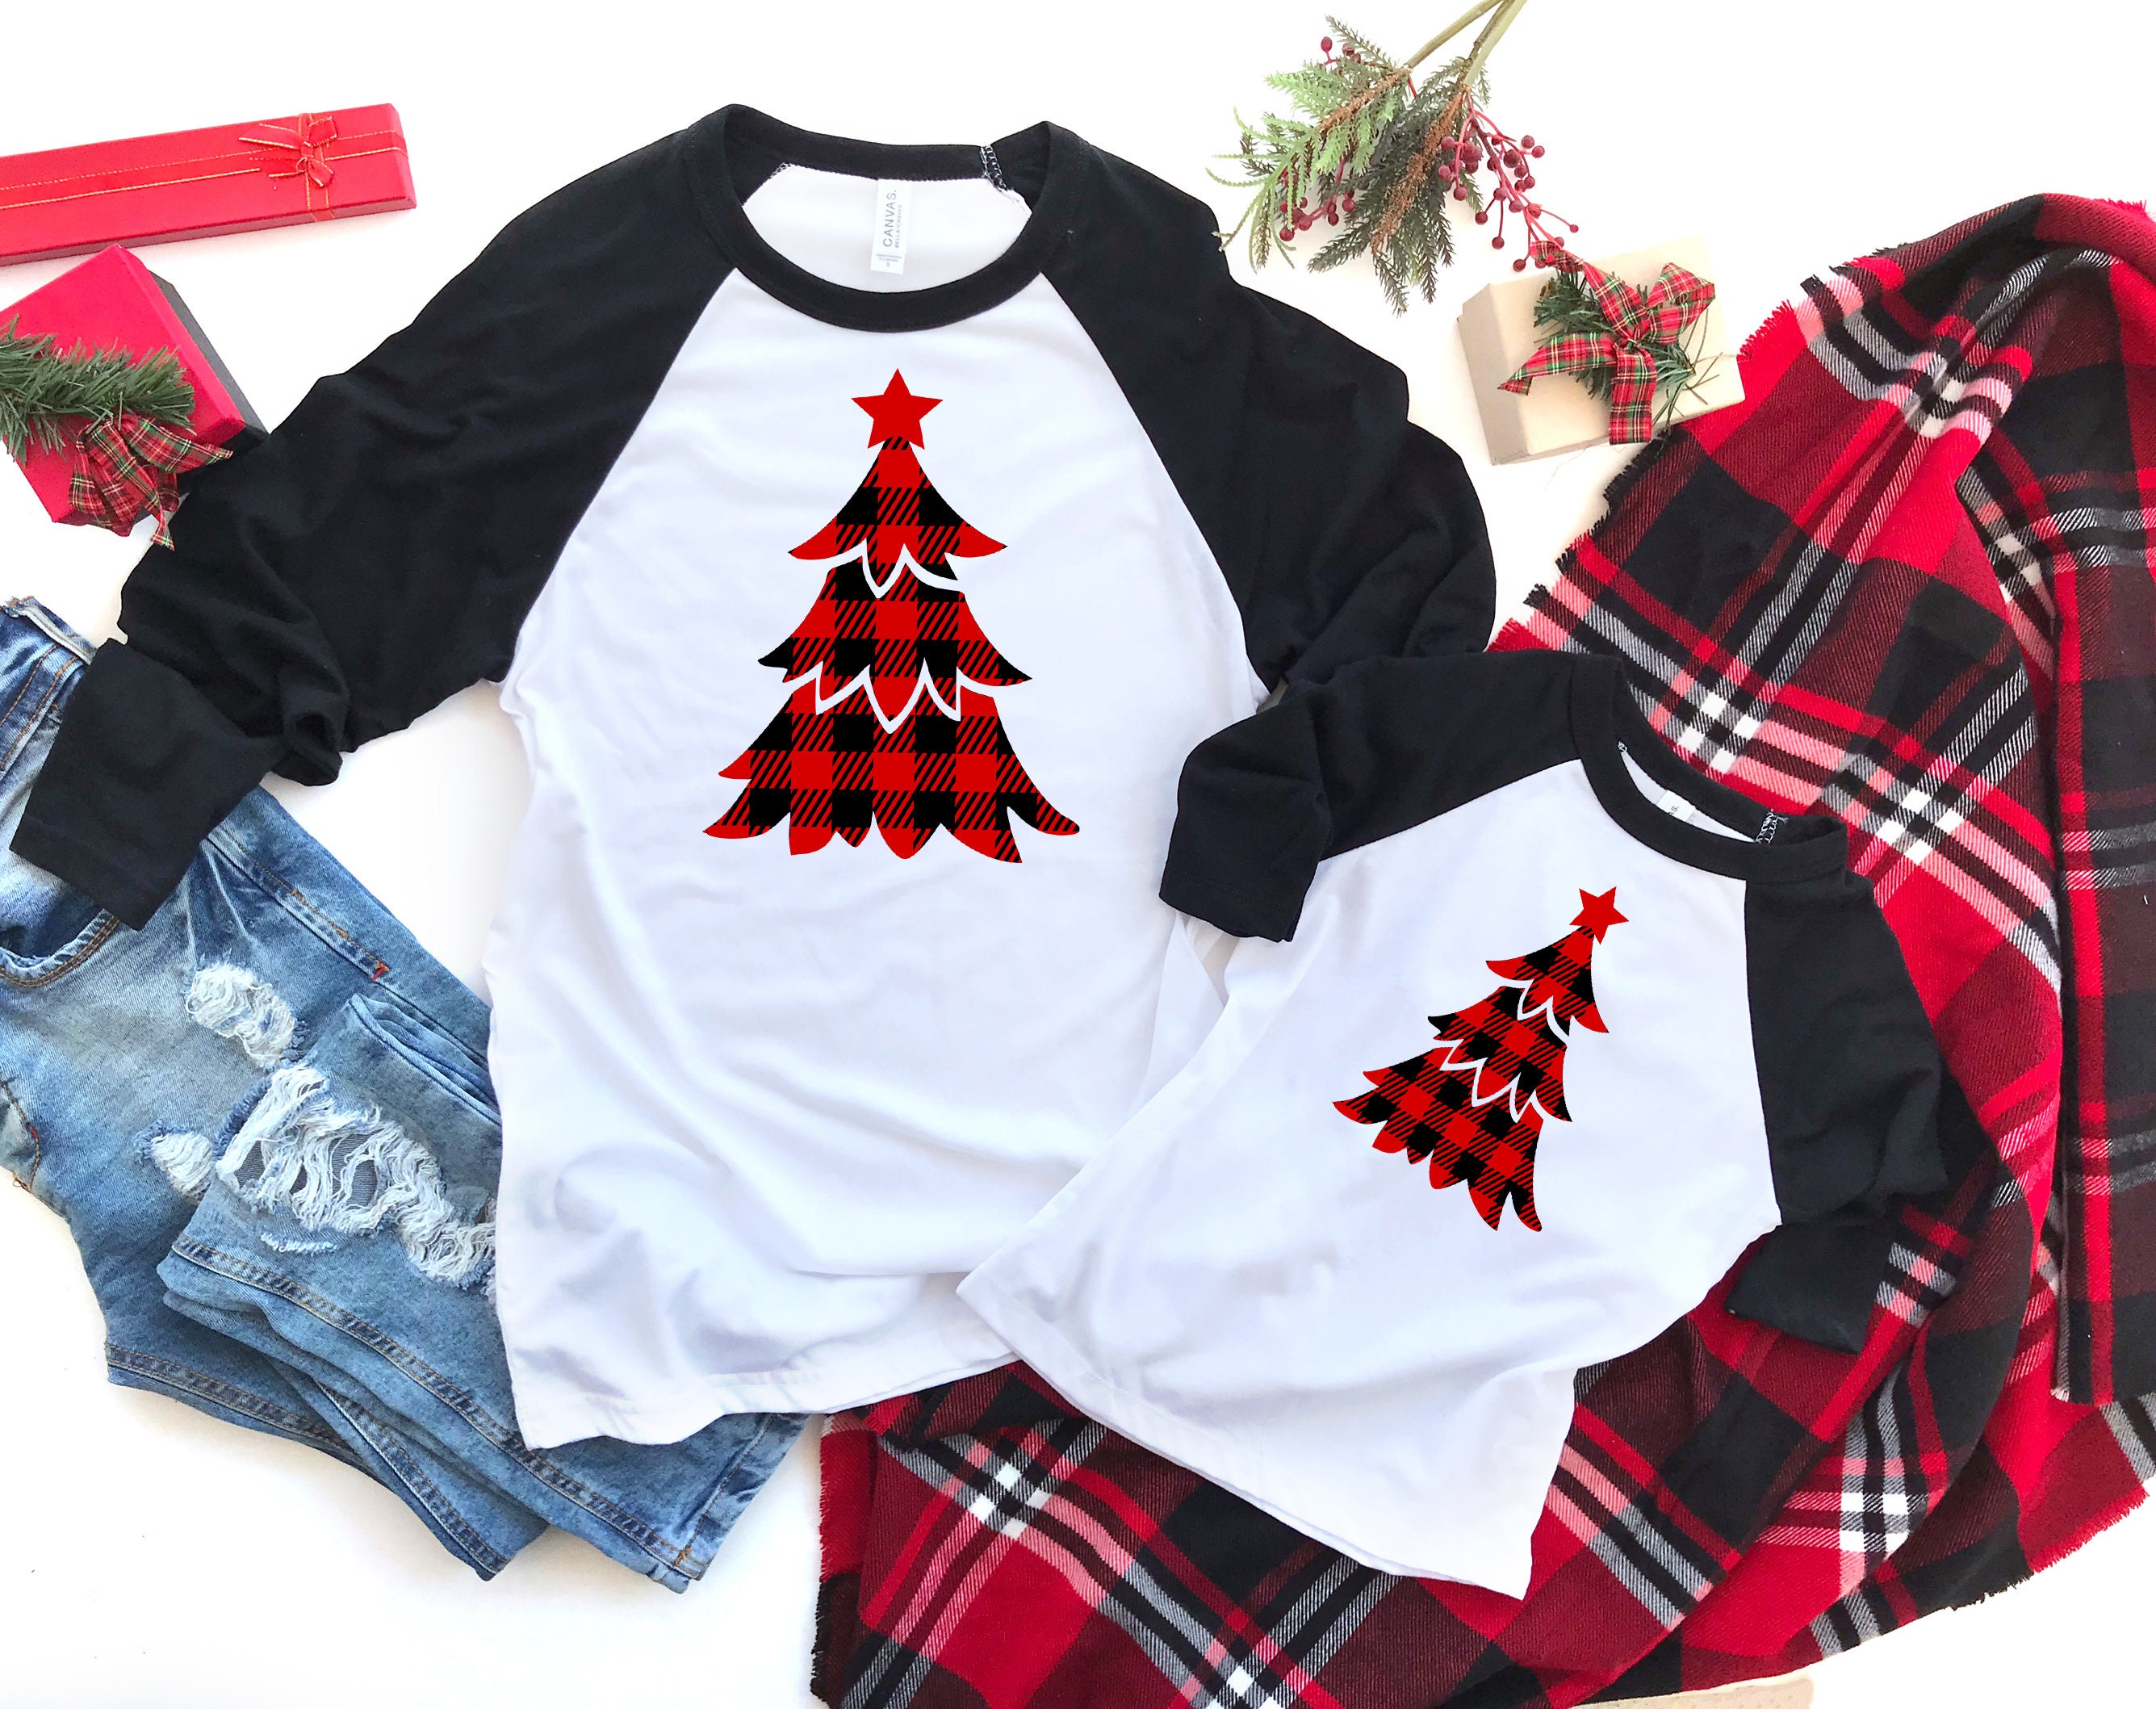 Buffalo Plaid Shirt, Christmas Tee For Women, Gifts, Womens Holiday Clothing, Cute T